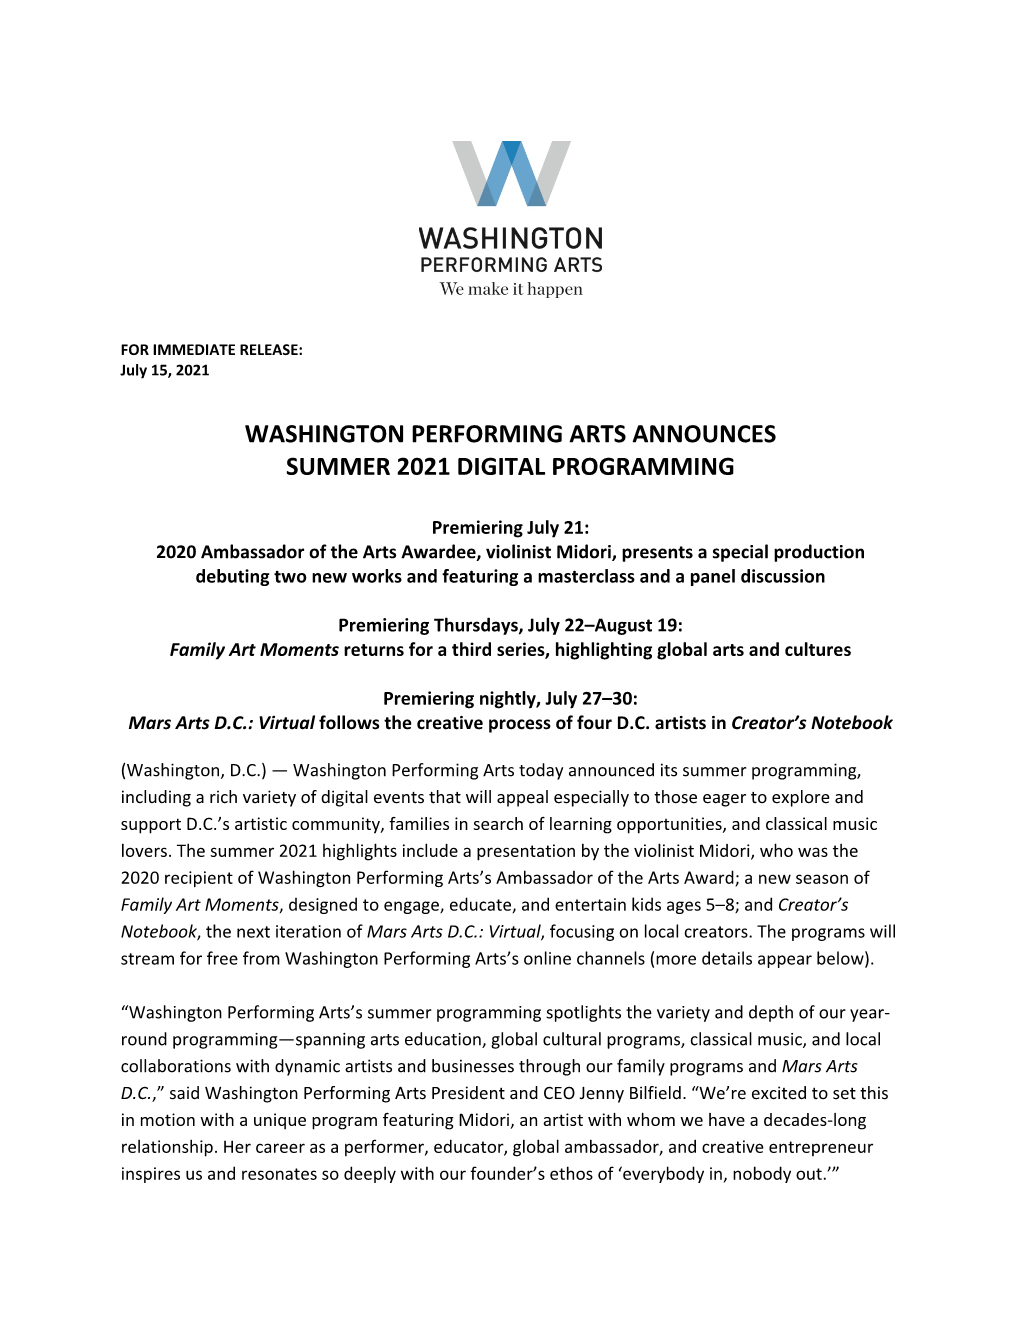 Washington Performing Arts Announces Summer 2021 Digital Programming